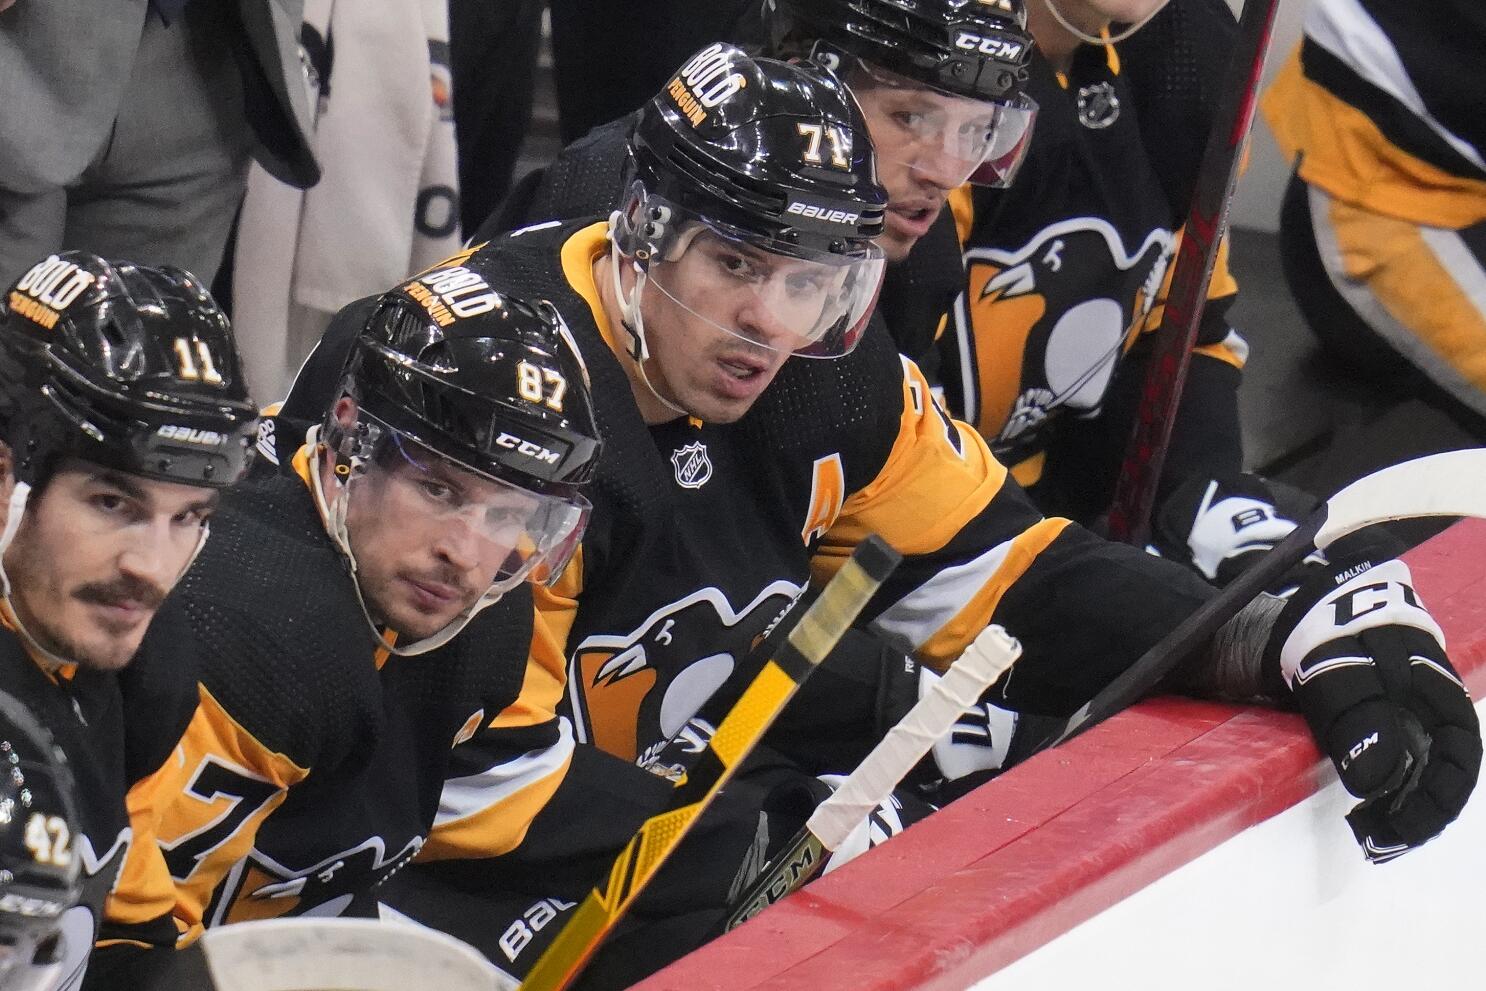 NHL Evgeni Malkin Pittsburgh Penguins Alternate Jersey